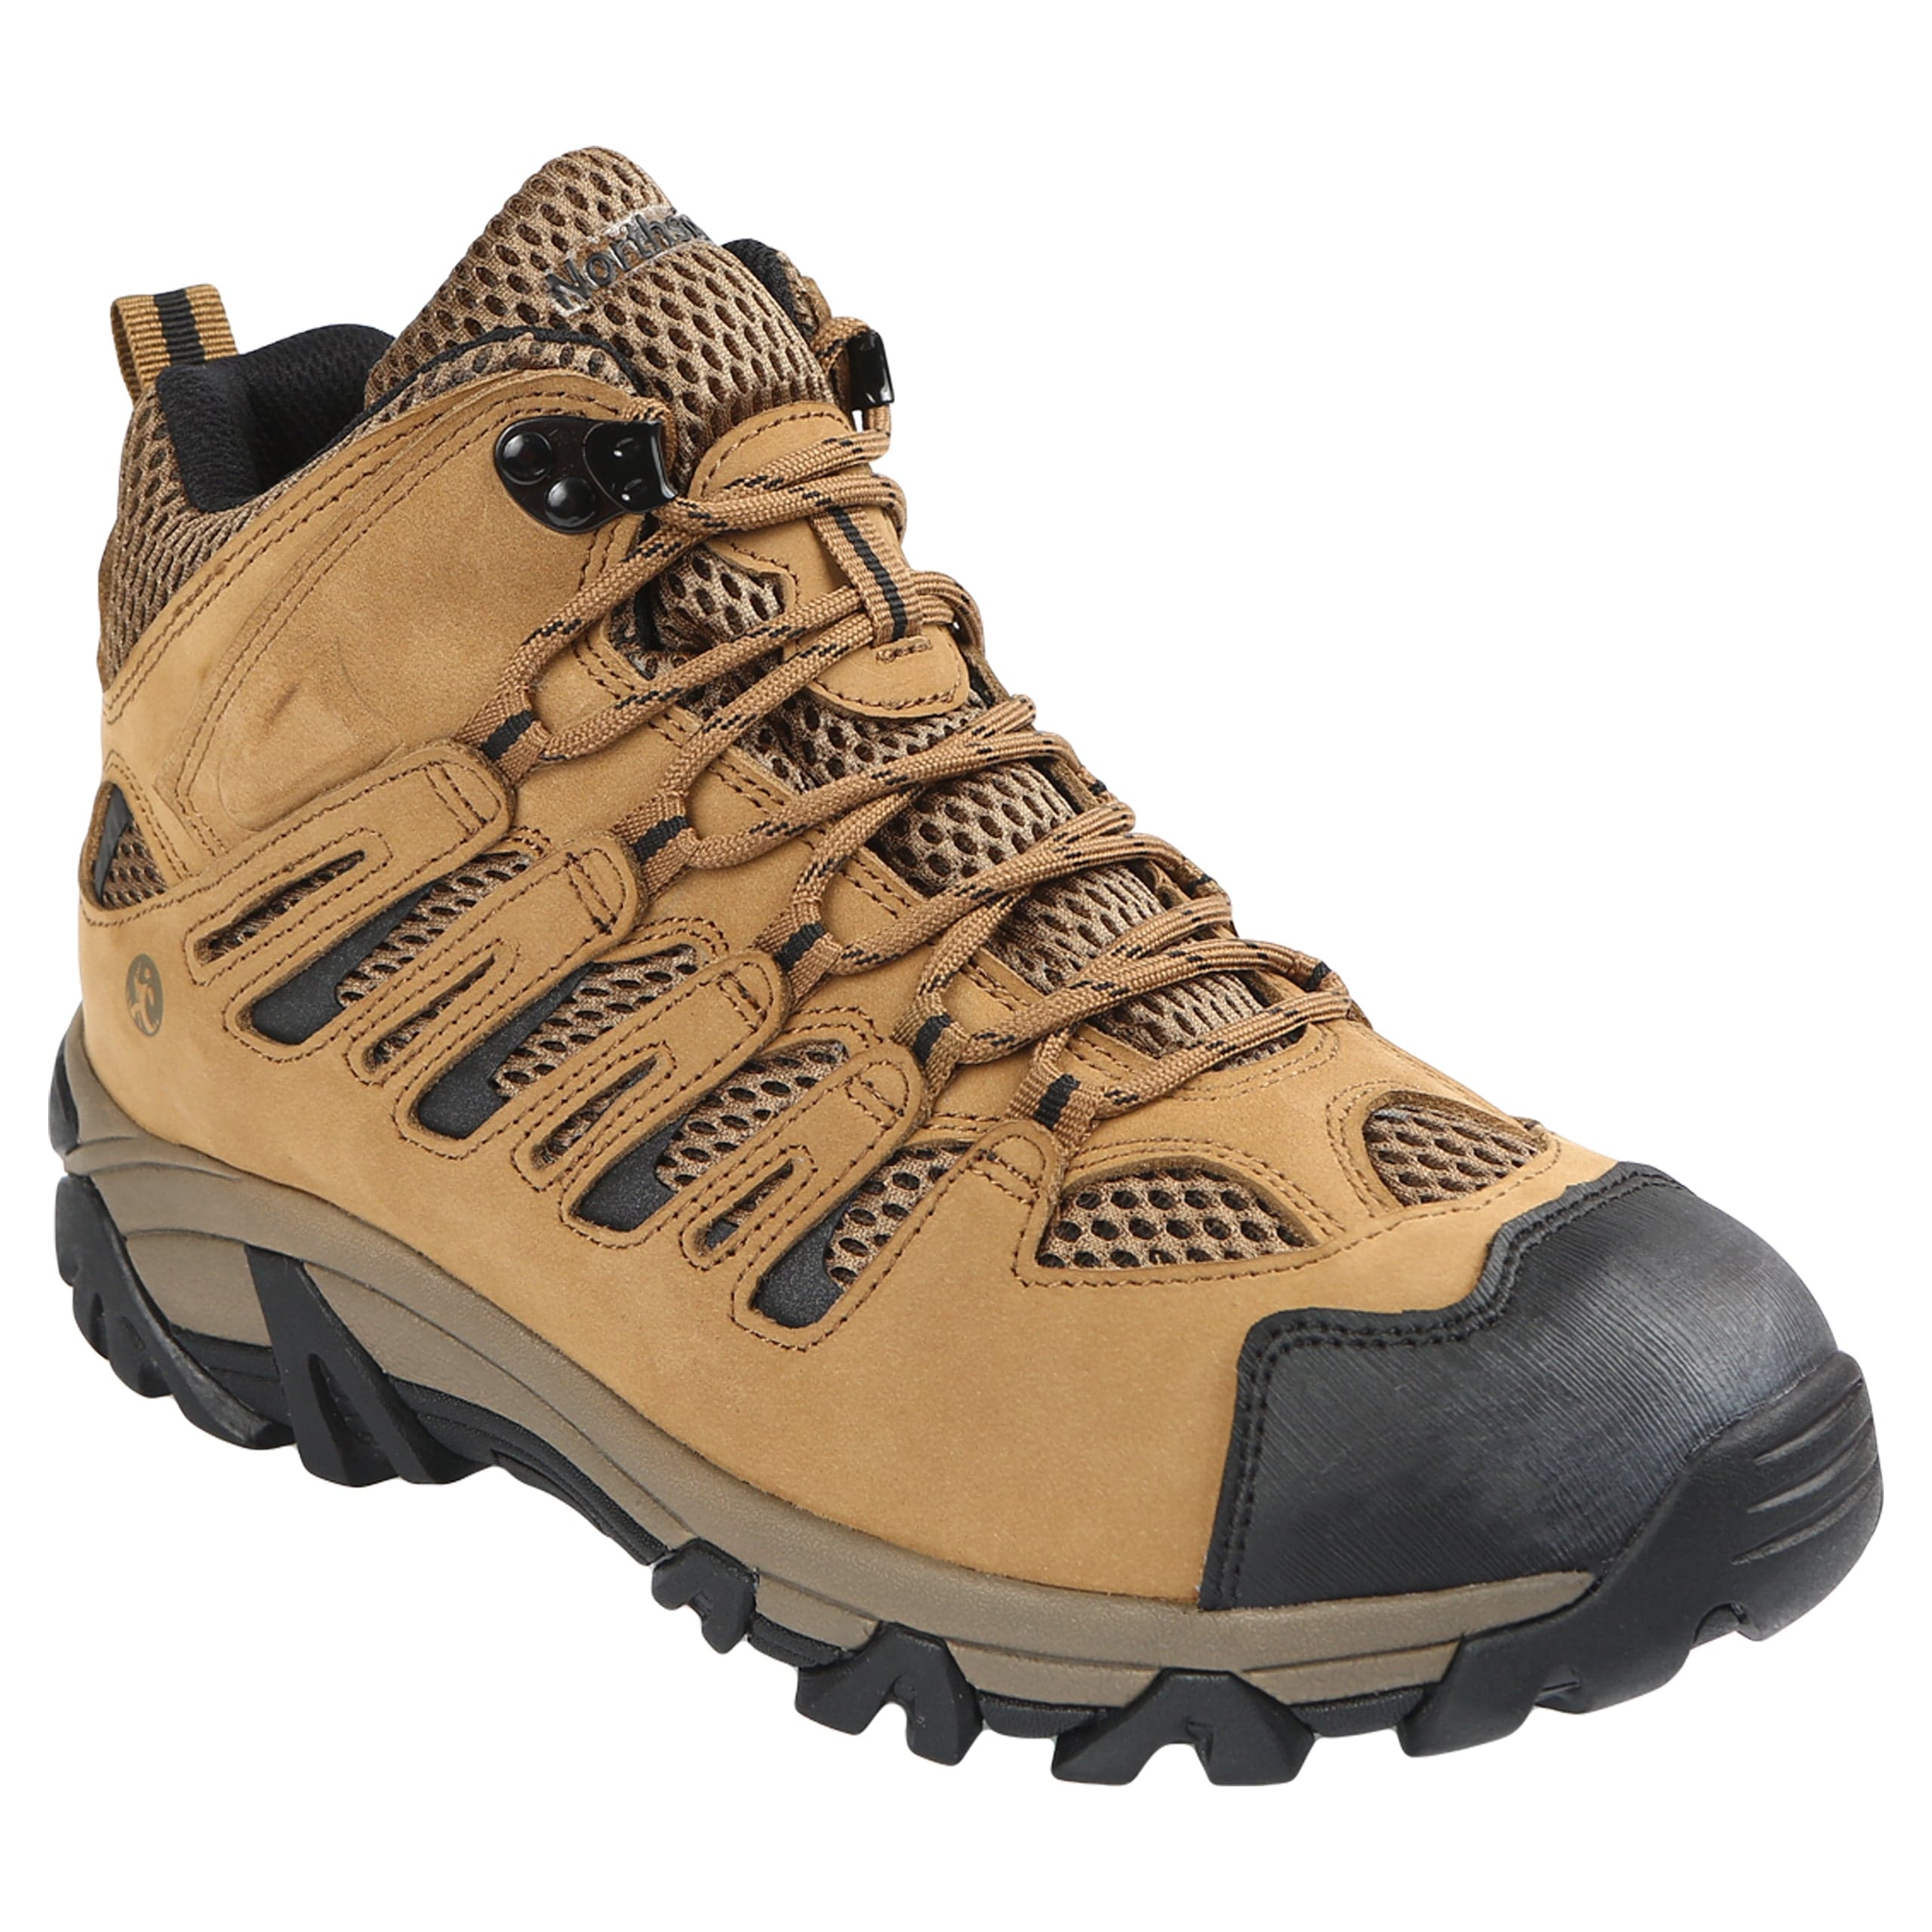 Men's Stimson Ridge Mid Waterproof Leather Hiking Boot - Northside USA